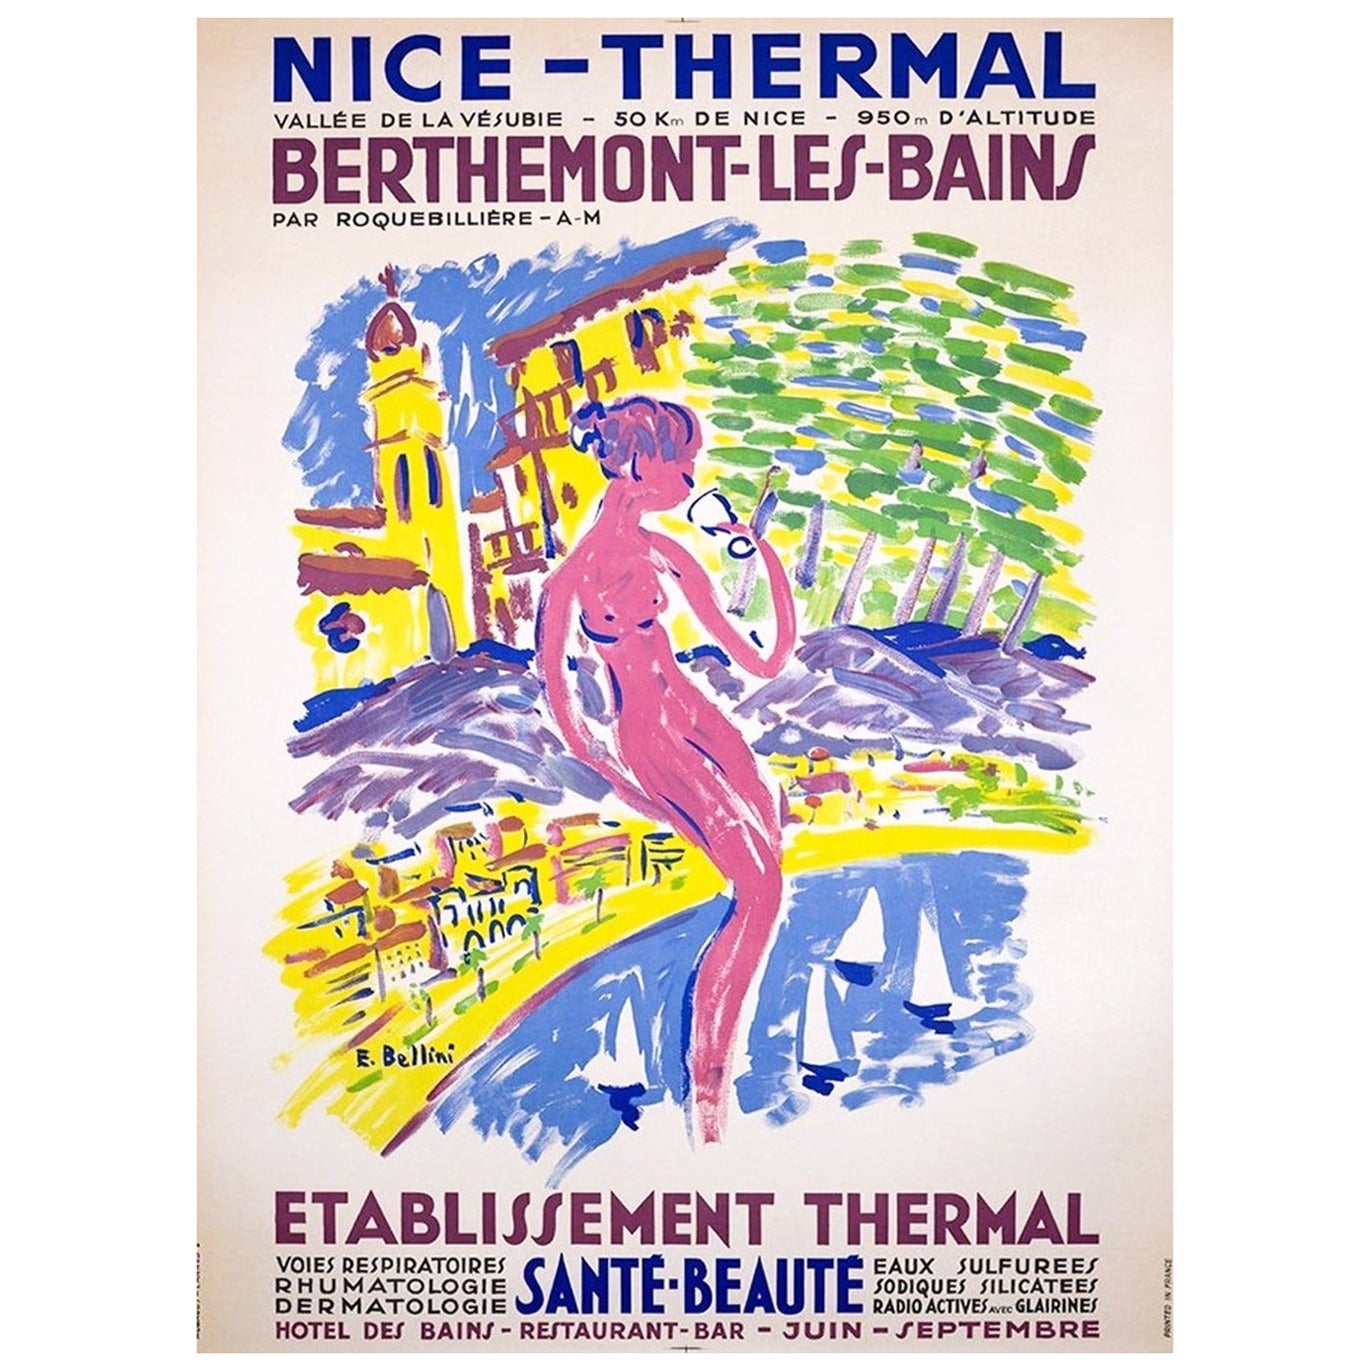 1960 Nice - Thermal Berthemont-les-bains Original Vintage Poster For Sale